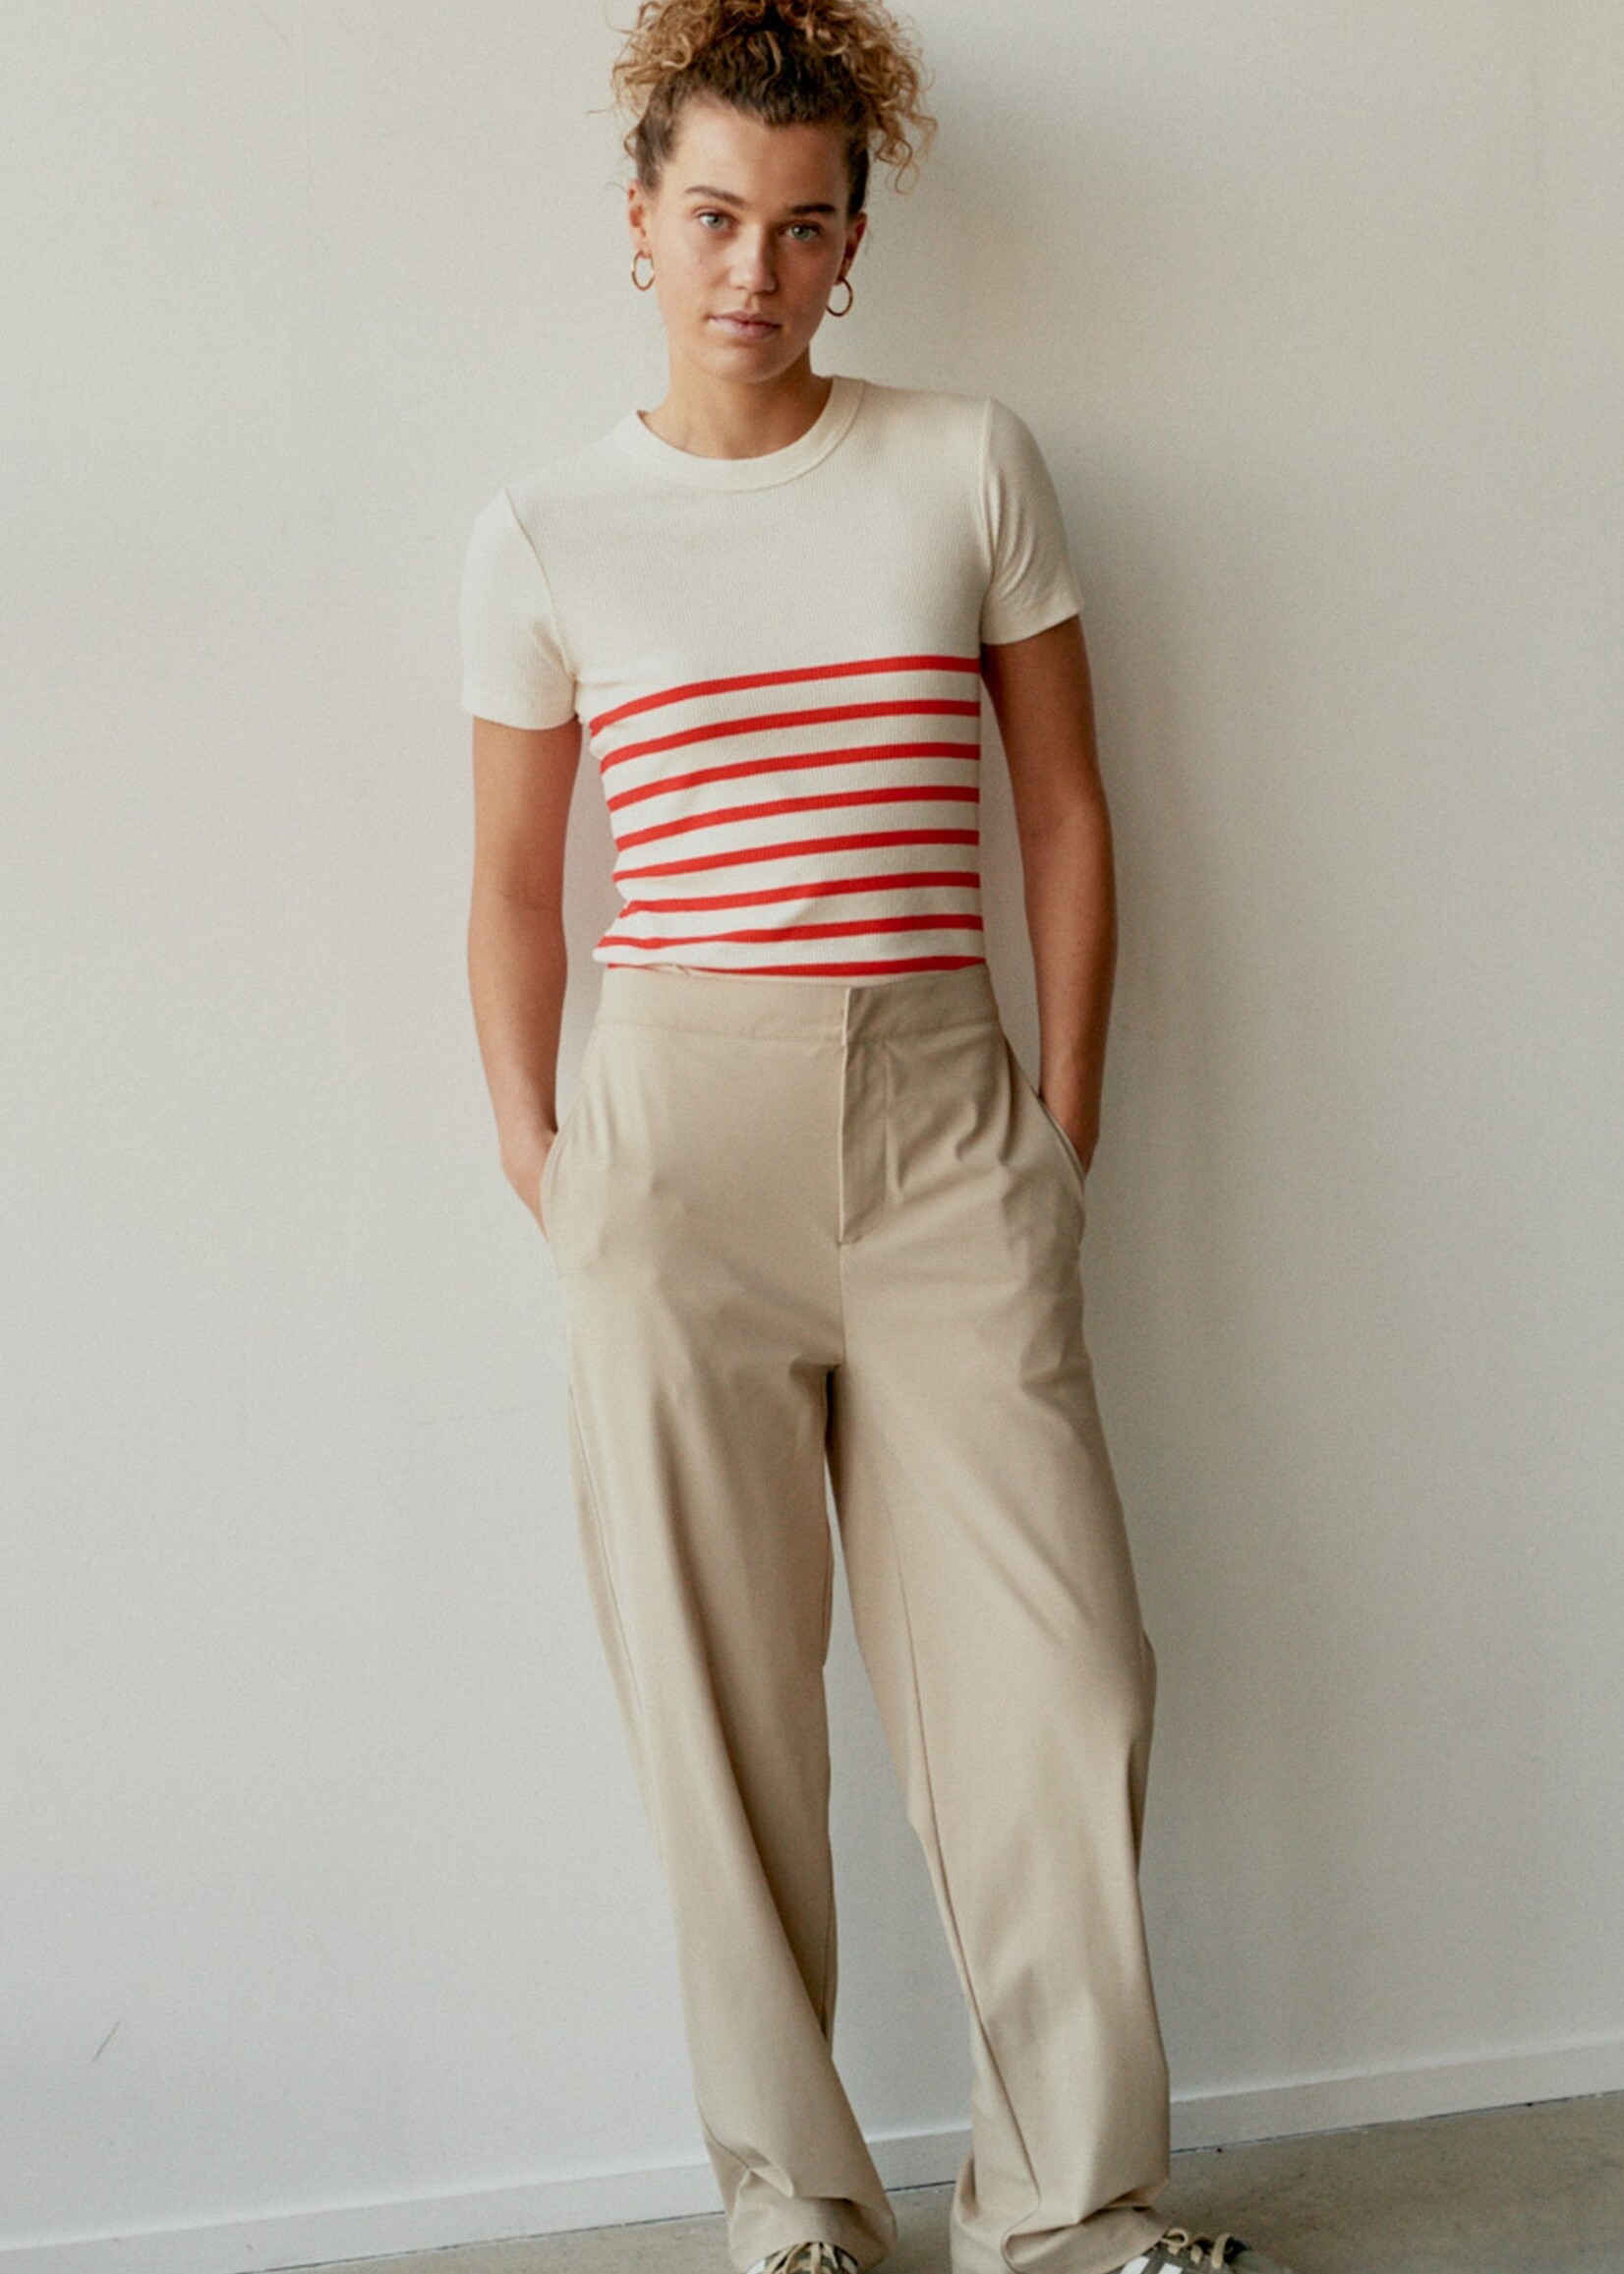 PENN & INK T-shirt Stripe